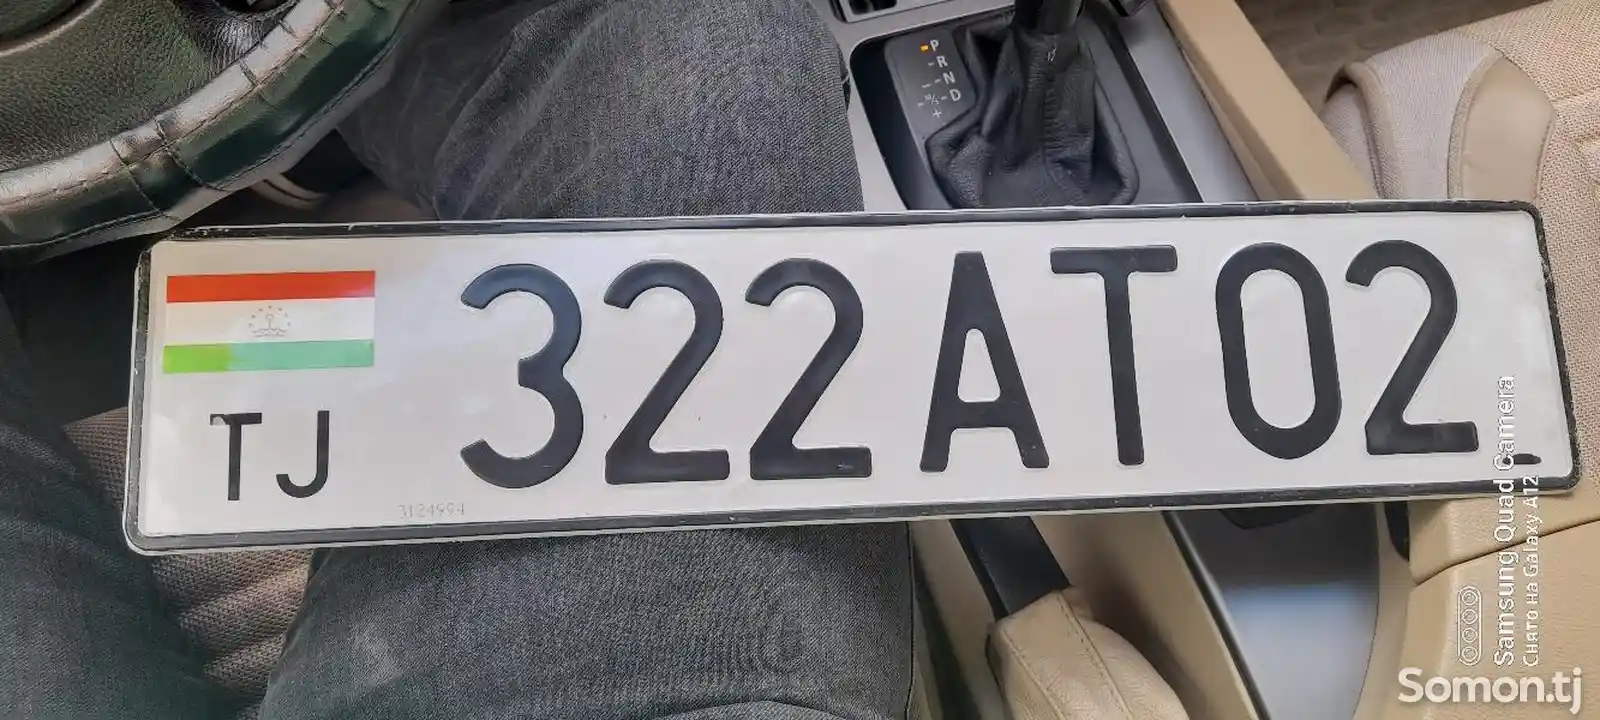 Найден номер машины 322AT02-1